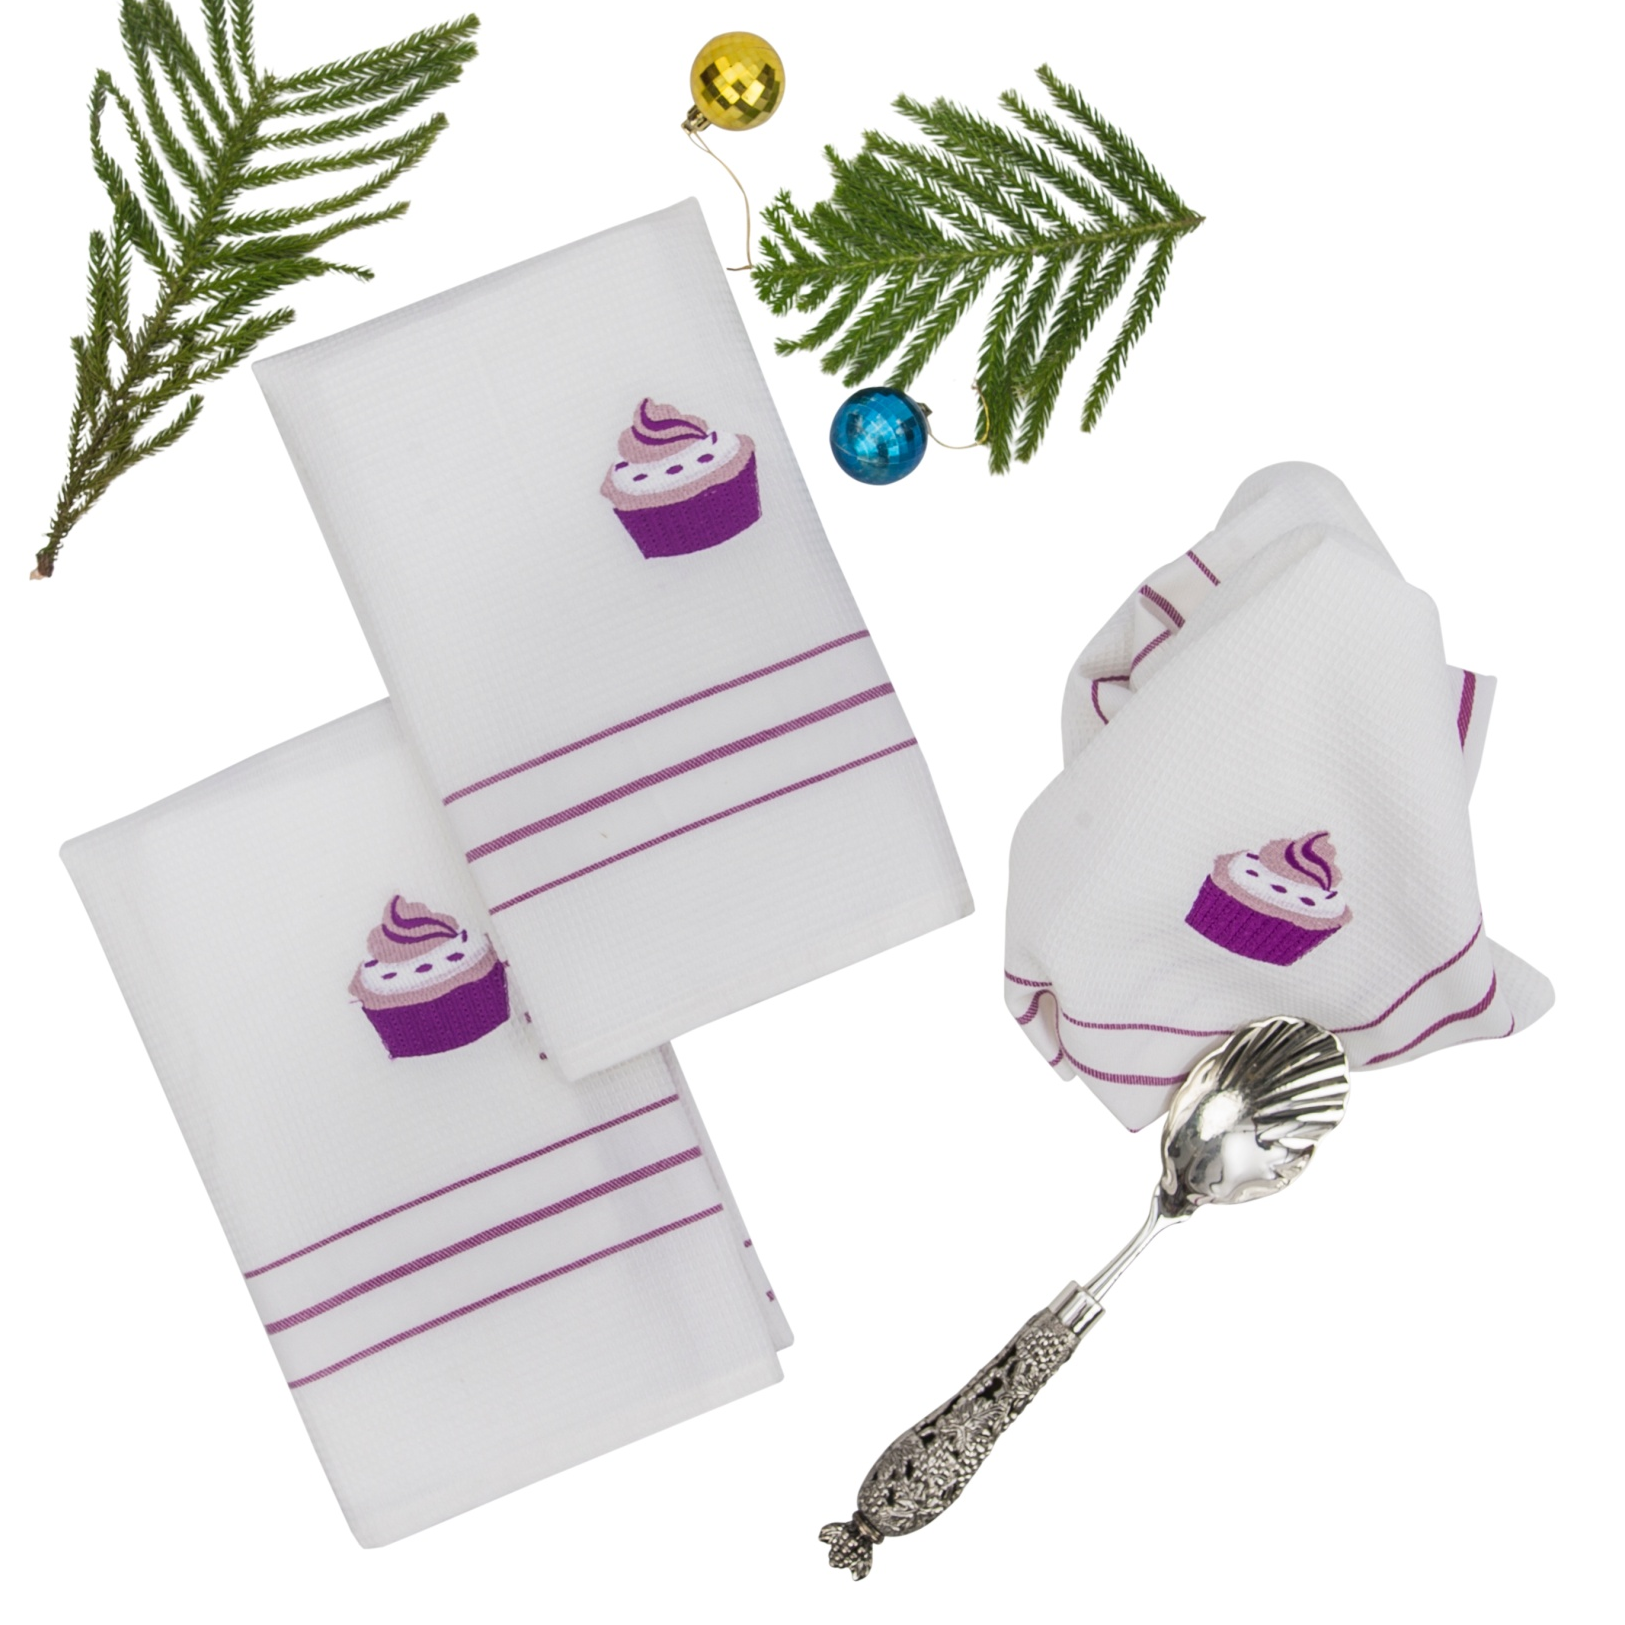 Tea Towel Gift Set 100% Cotton Kitchen Decorative Dish Towels Box